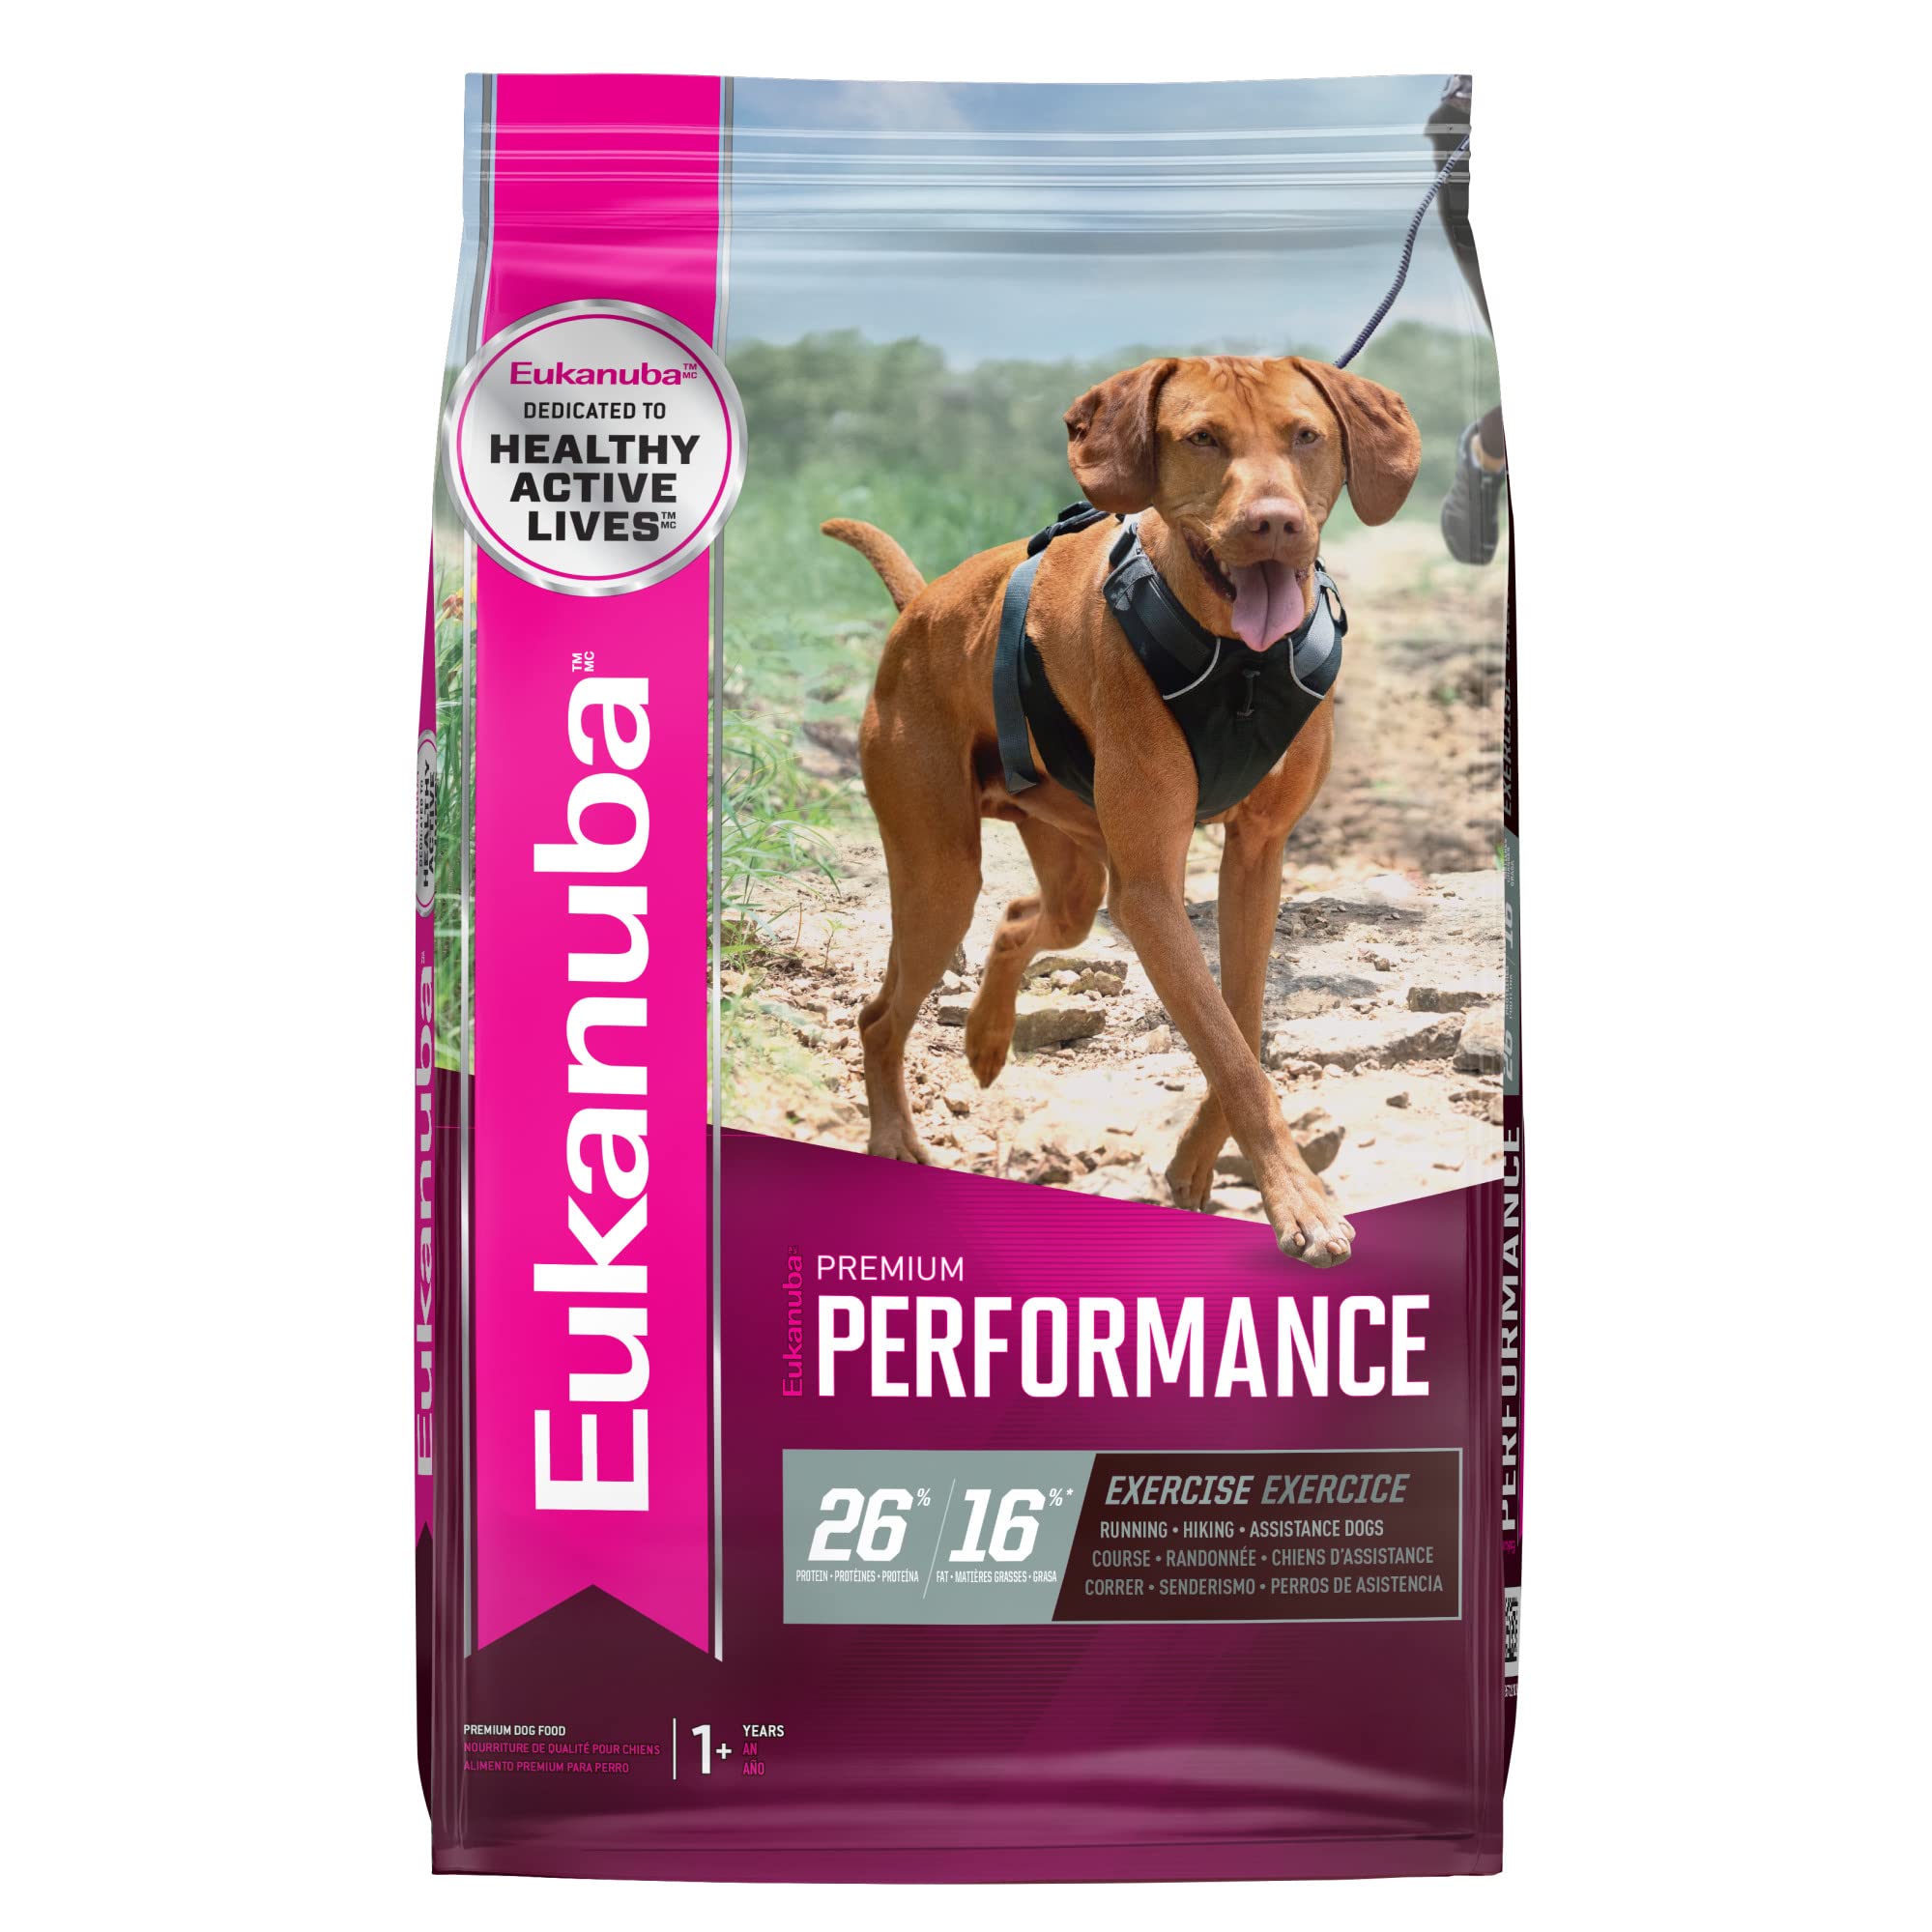 Eukanuba Premium Performance 26/16 Exercise Dry Dog Food - 28 Lbs  